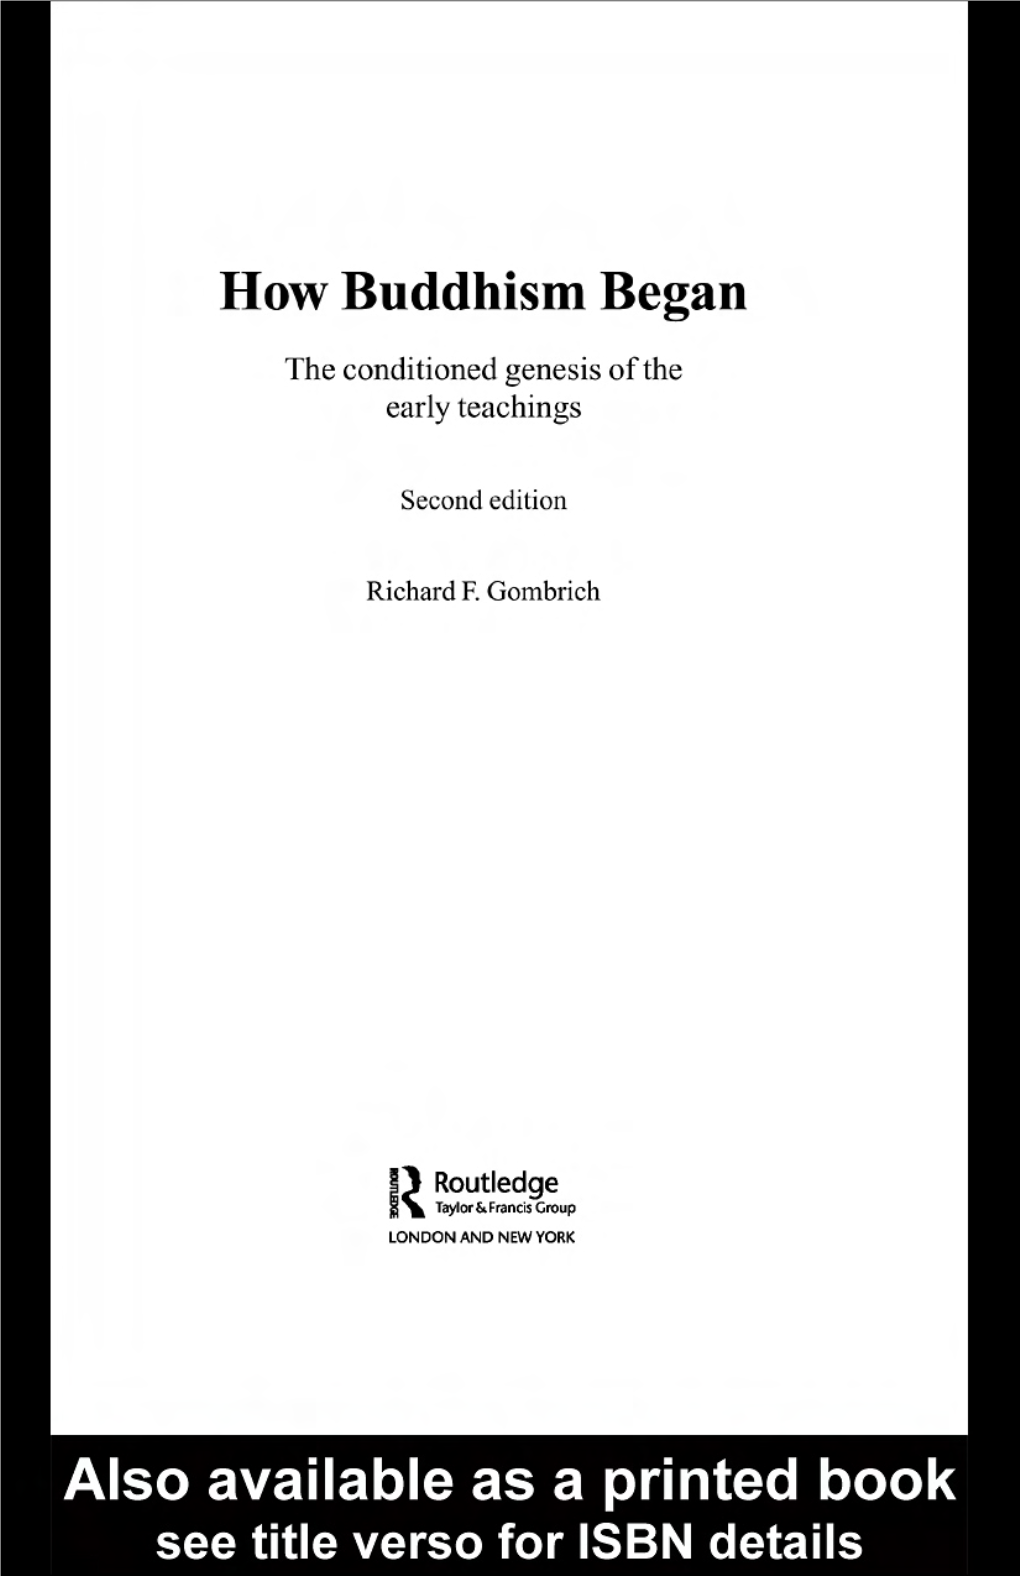 How Buddhism Began by R.F. Gombrich